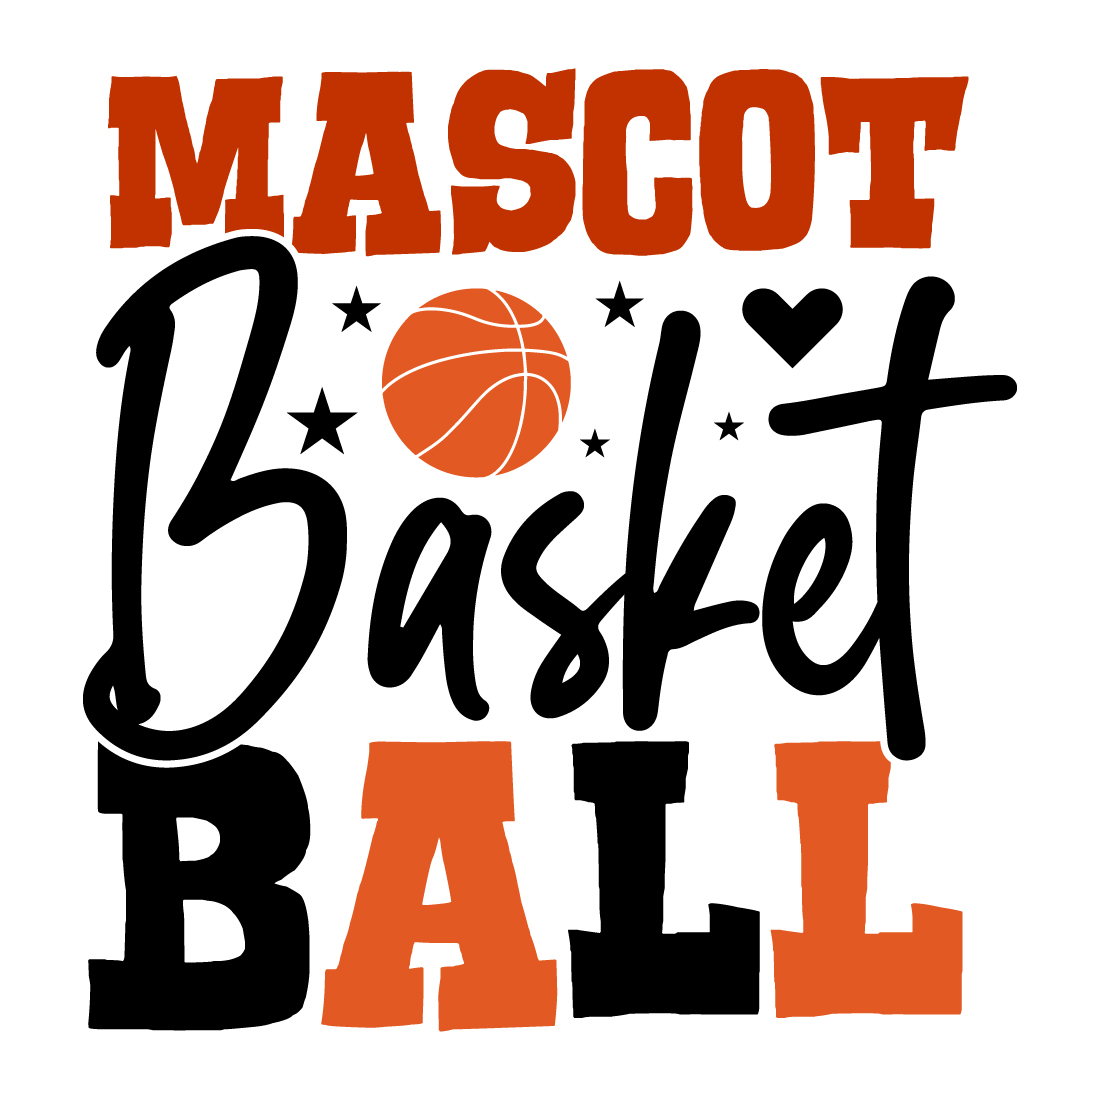 Mascot Basketball preview image.